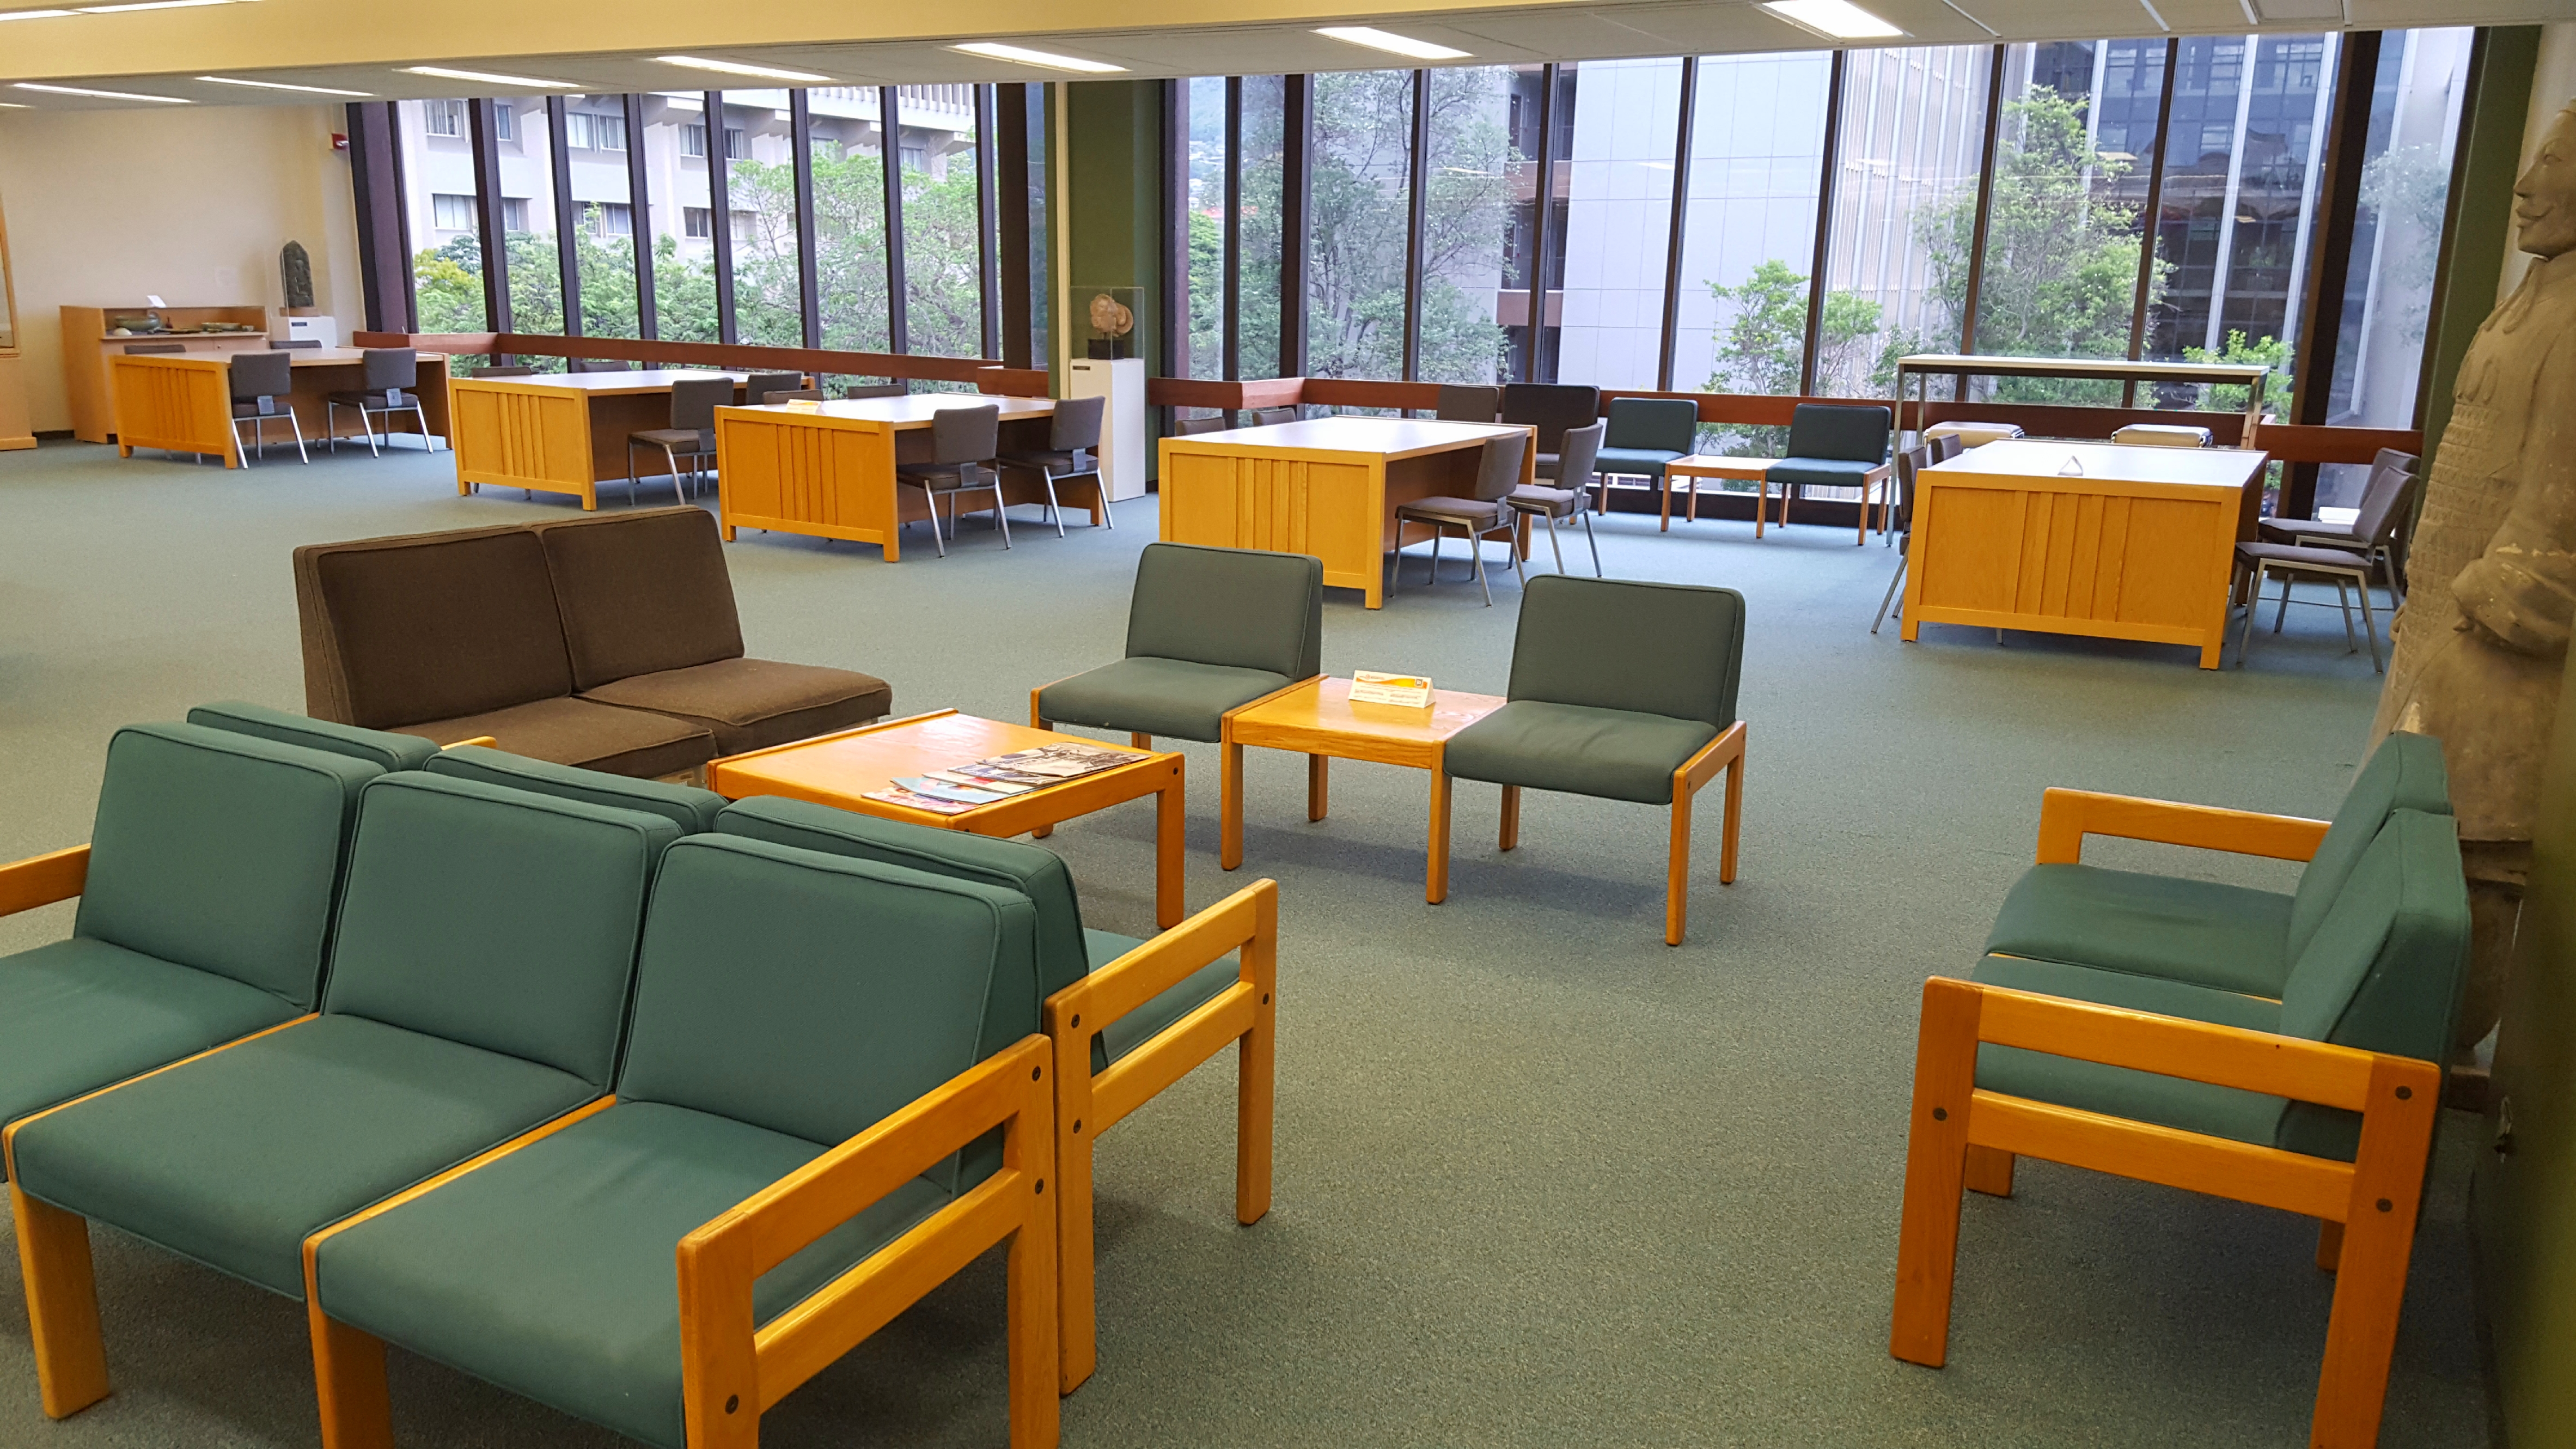 Hamilton Library Fourth Floor Study Space